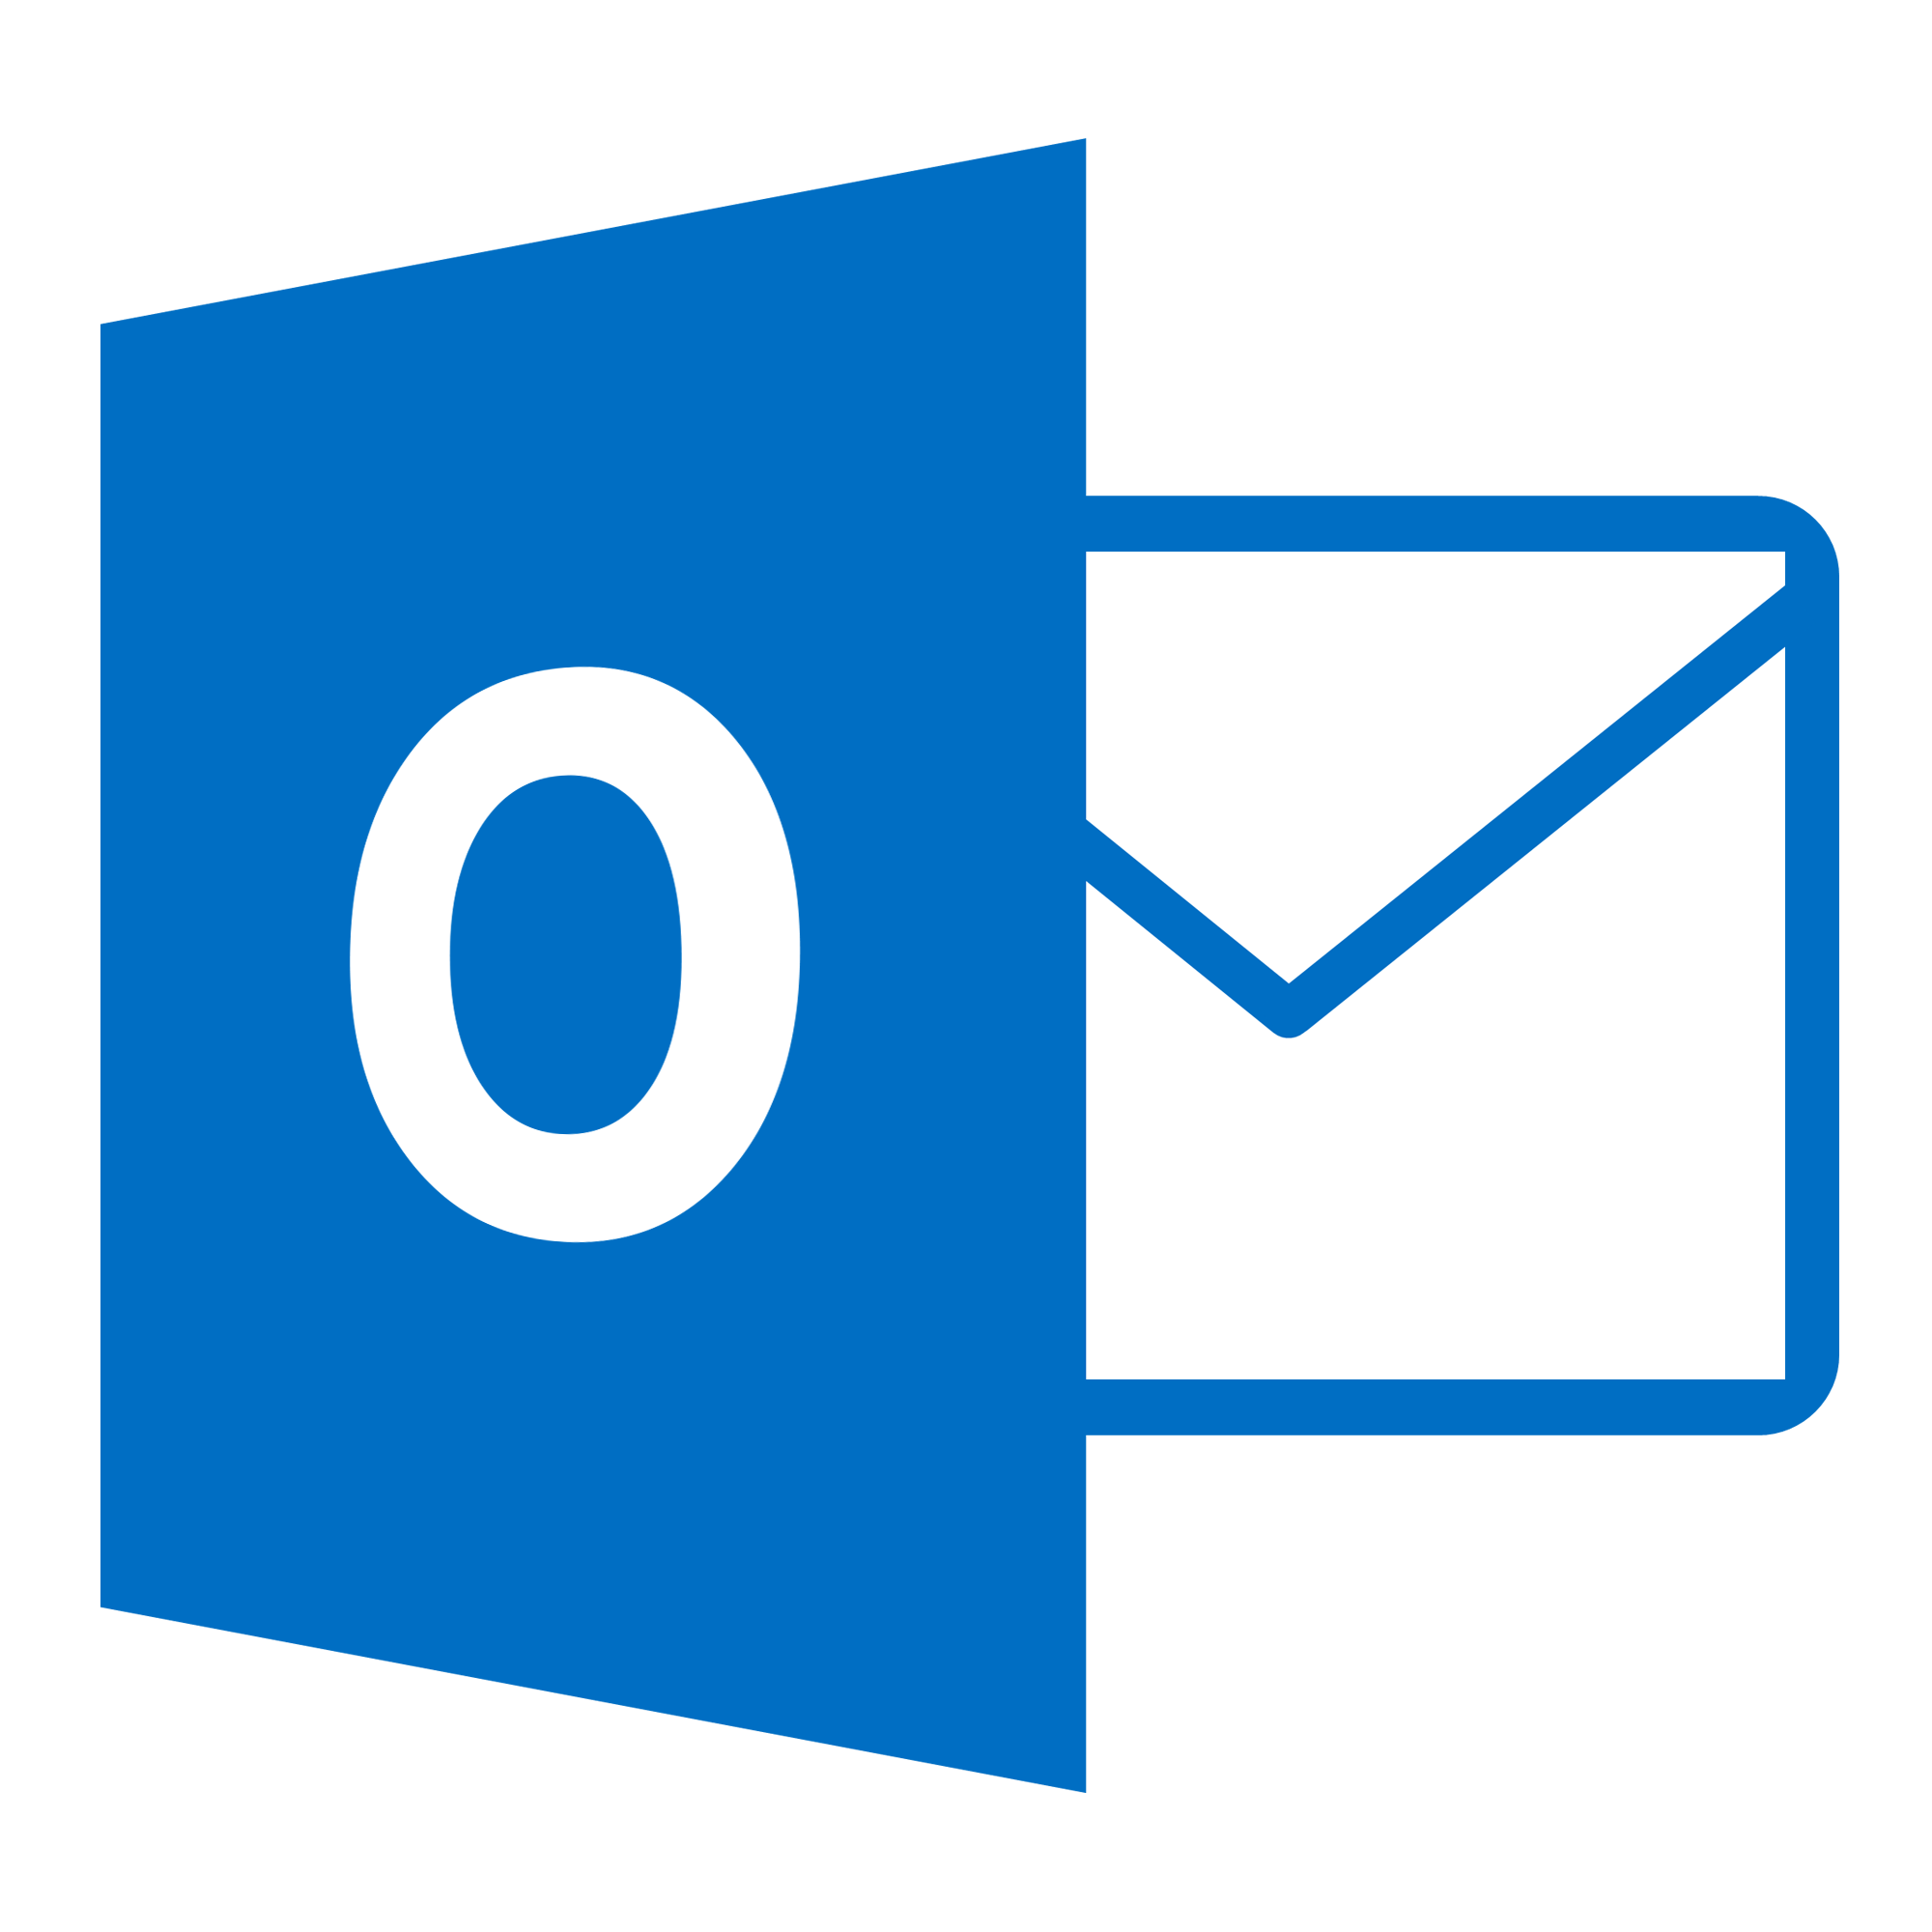 Microsoft Outlook Logo Png Logo Outlook Com Transparent Images Free Transparent Png Logos